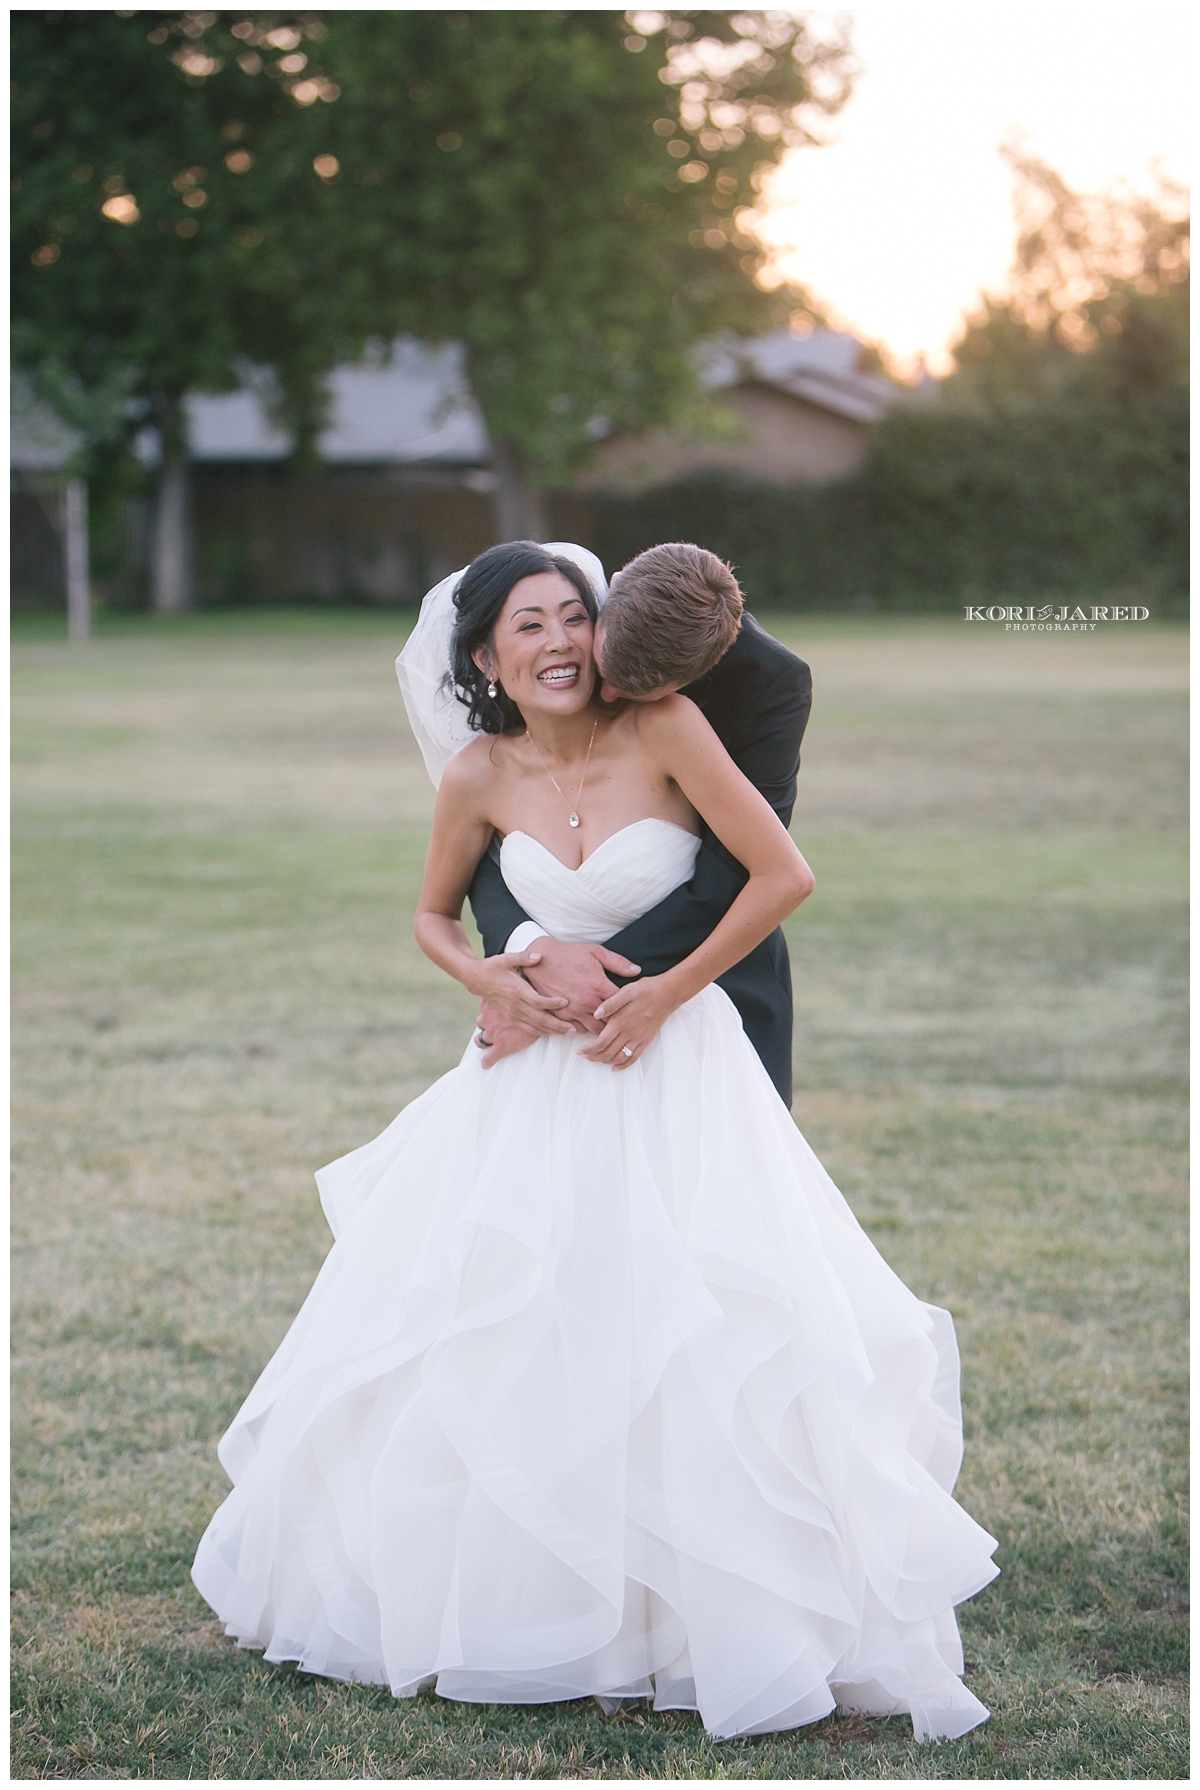 Brad + Danielle (Ripon, CA – Wedding) | Kori and Jared Photography Blog